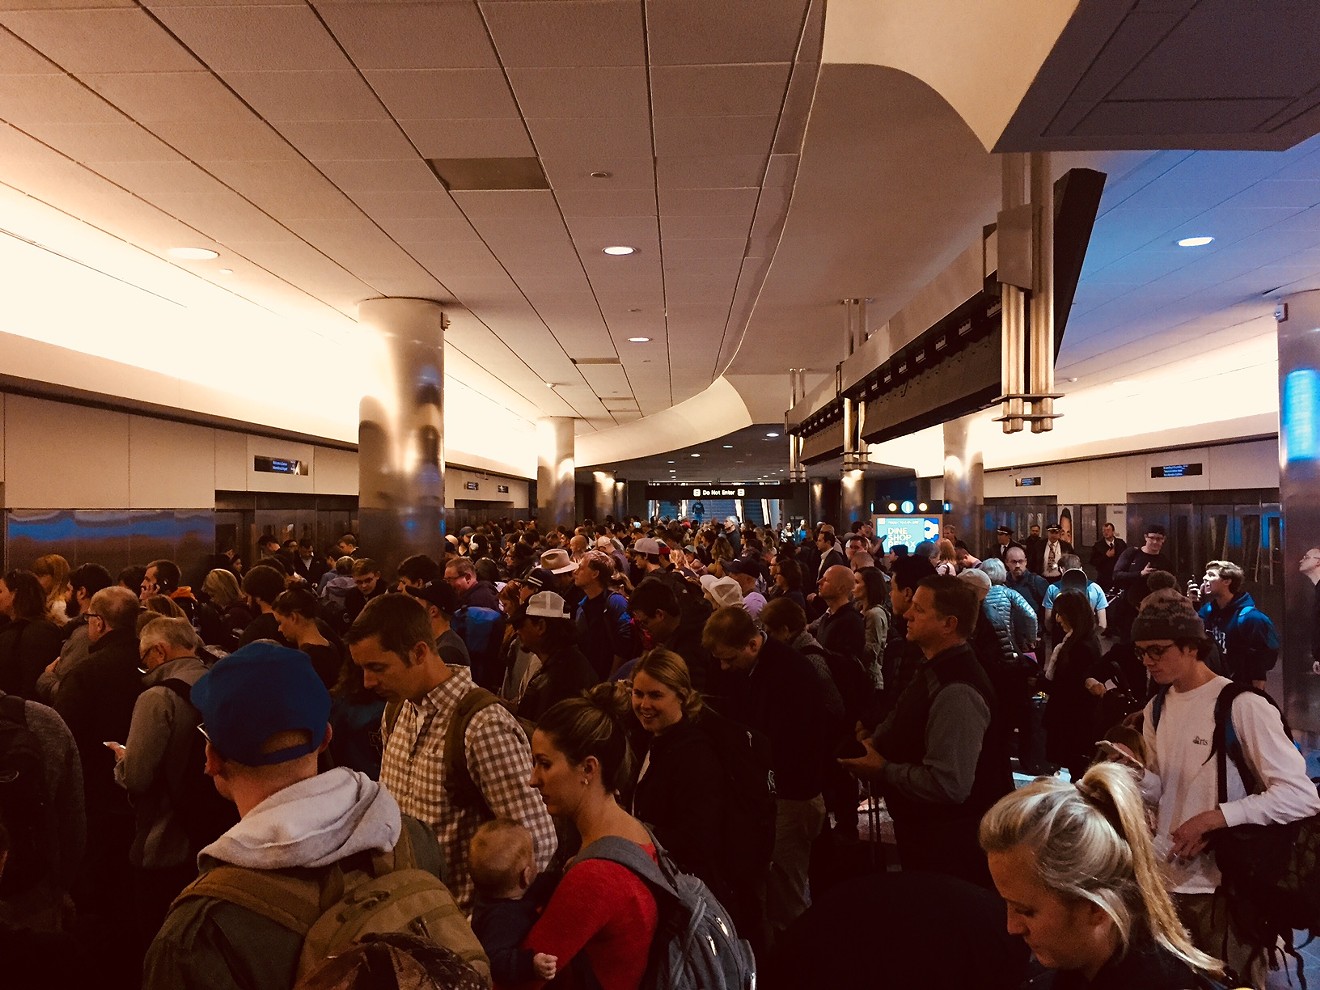 Denver International Airport at 7:35 a.m.